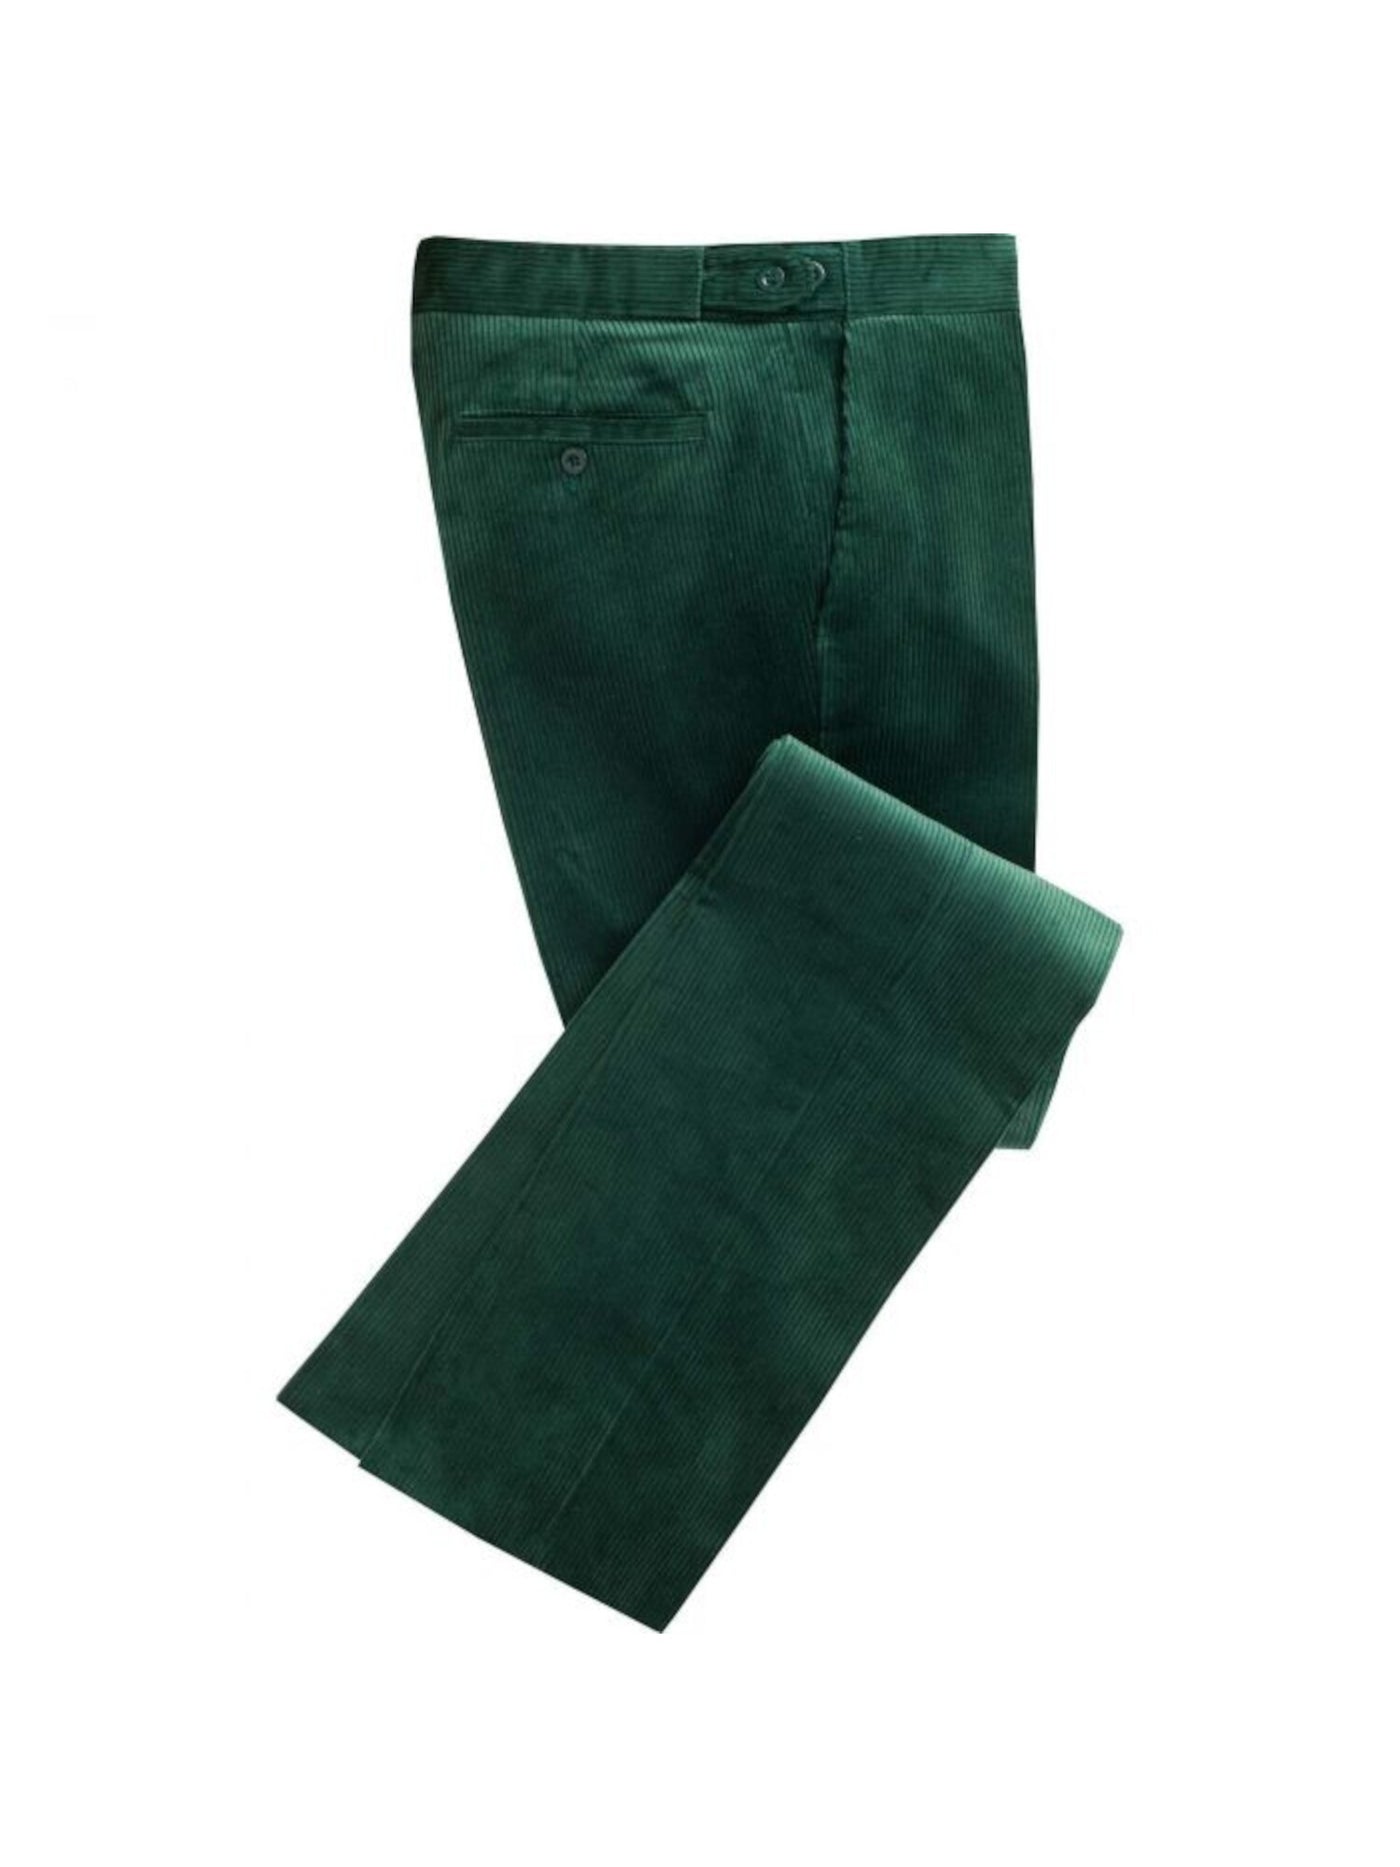 TORIN OPIFICIO Mens Green Flat Front Straight Leg Stretch Regular Fit Cotton Blend Pants 54R 39W\36L